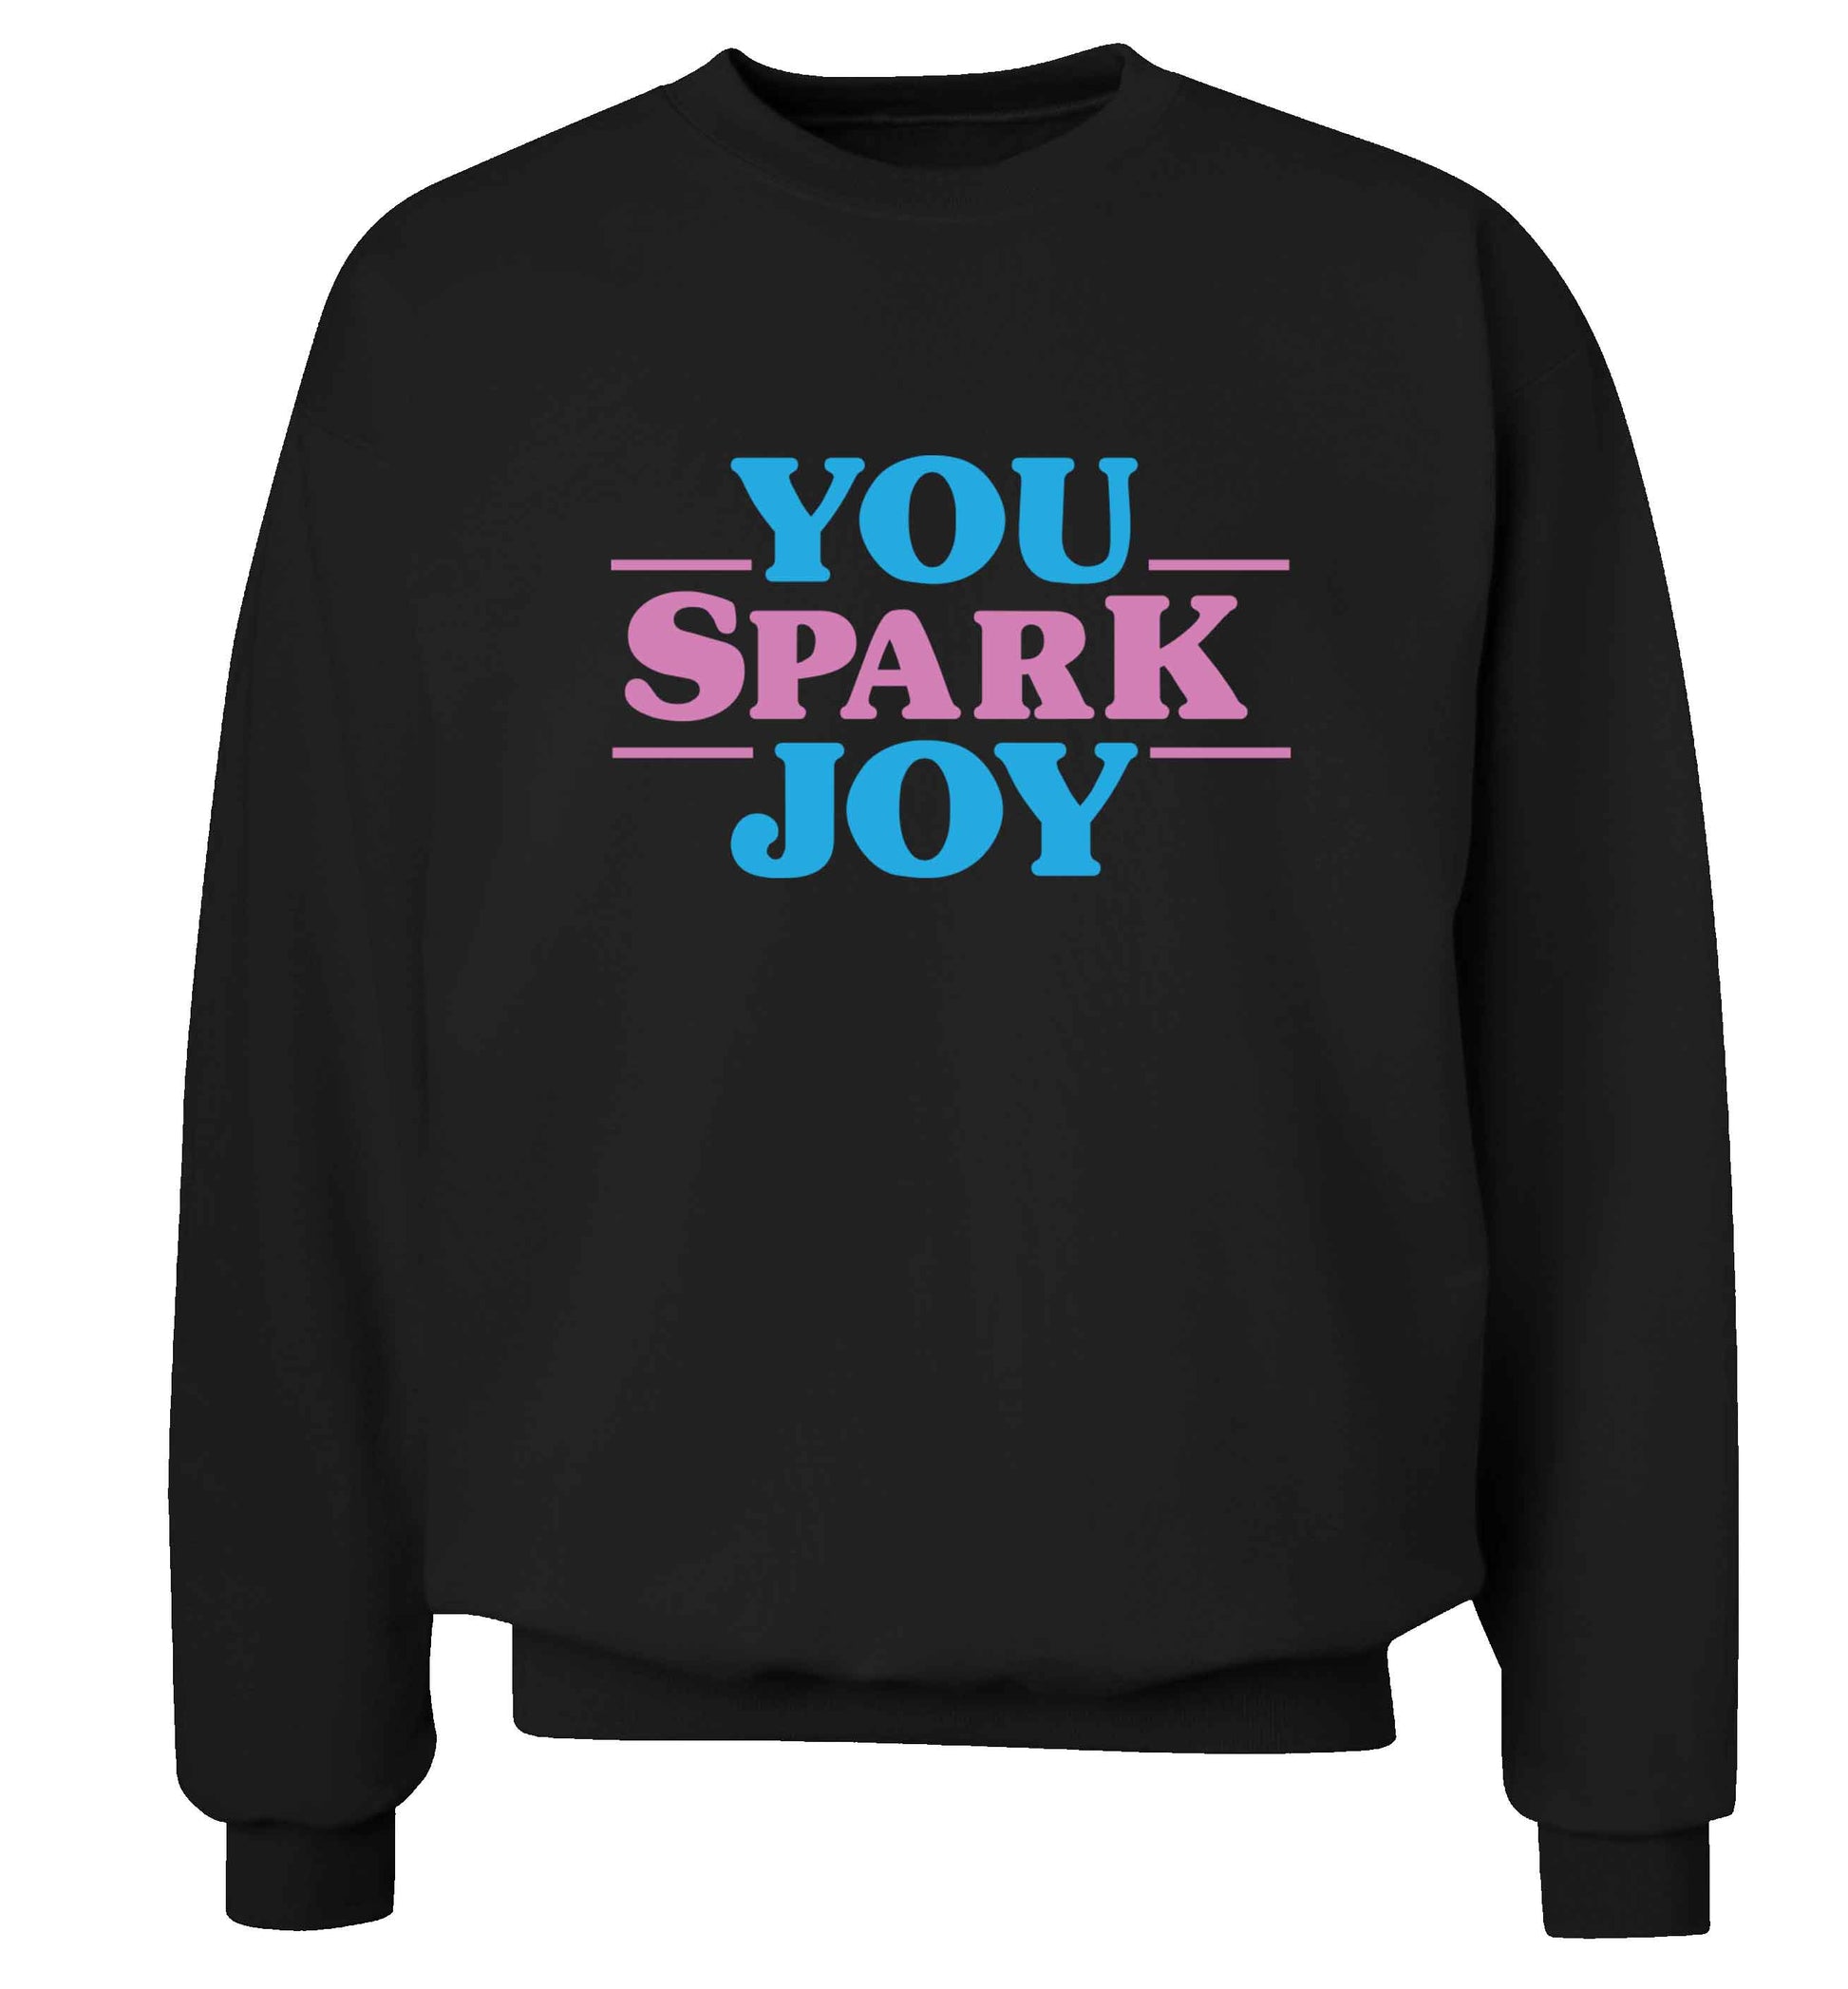 You spark joy adult's unisex black sweater 2XL